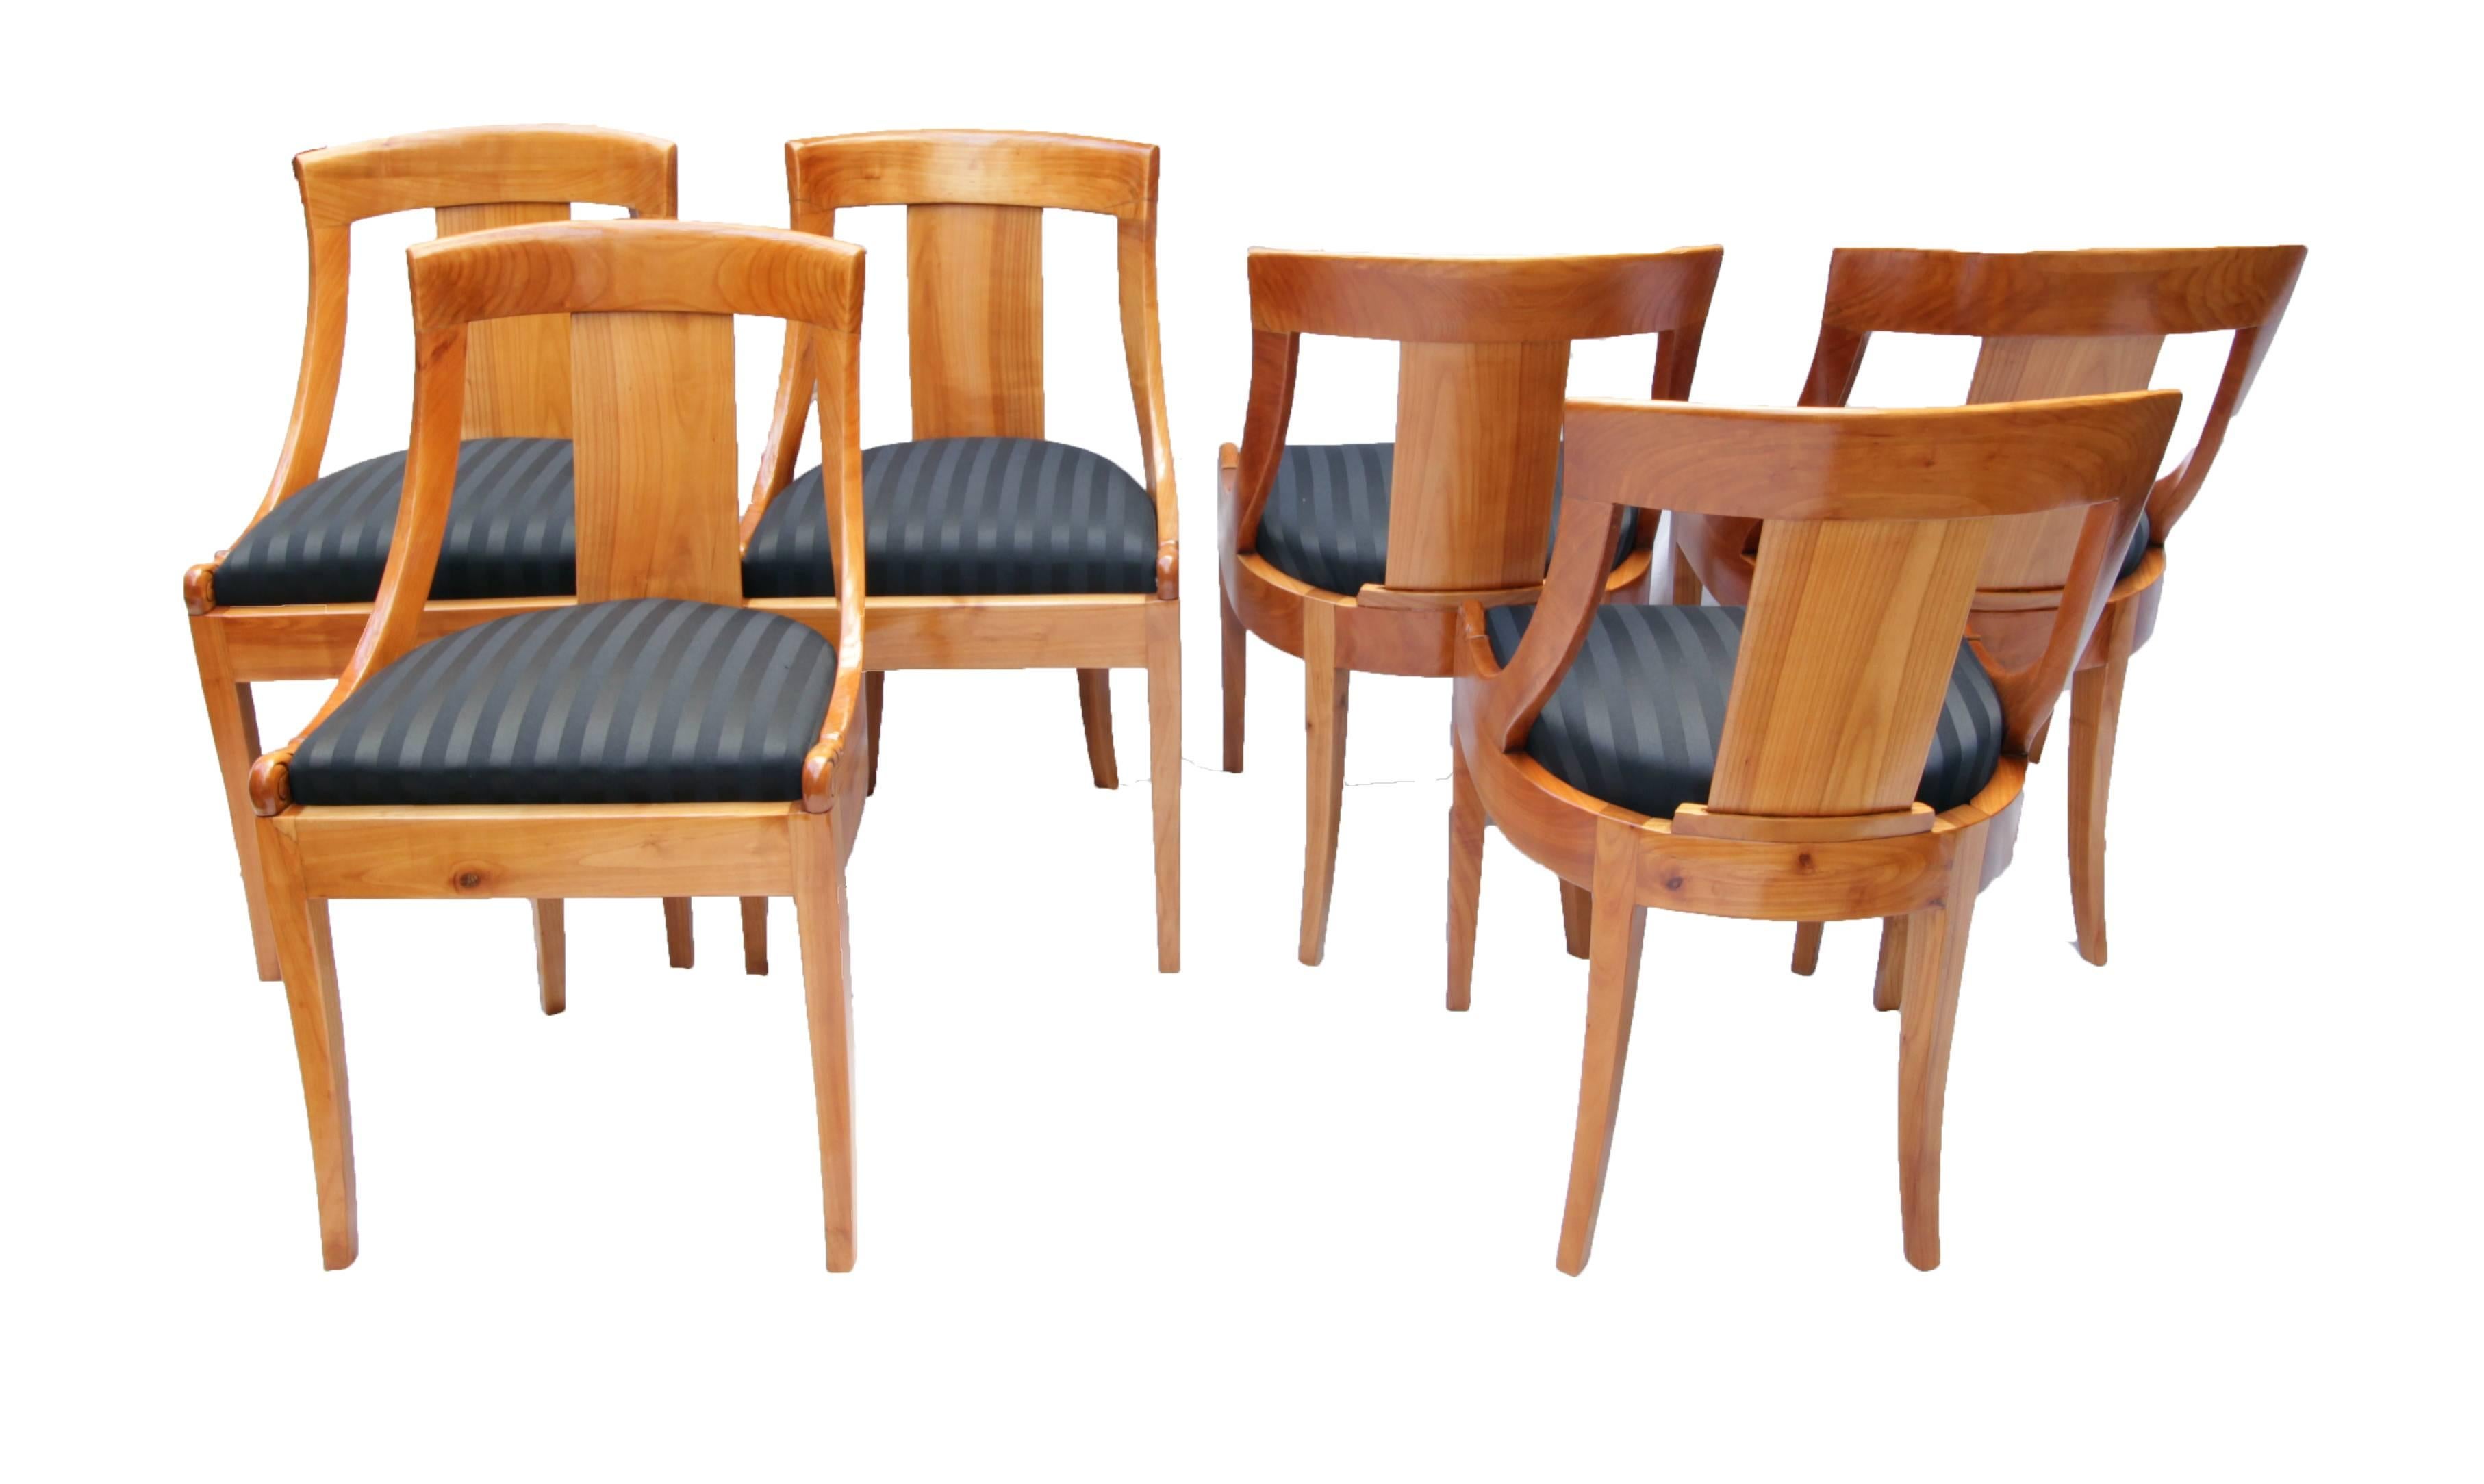 German 19th Century Biedermeier Gondola Chairs Set of 6, solid Cherry, new upholstered